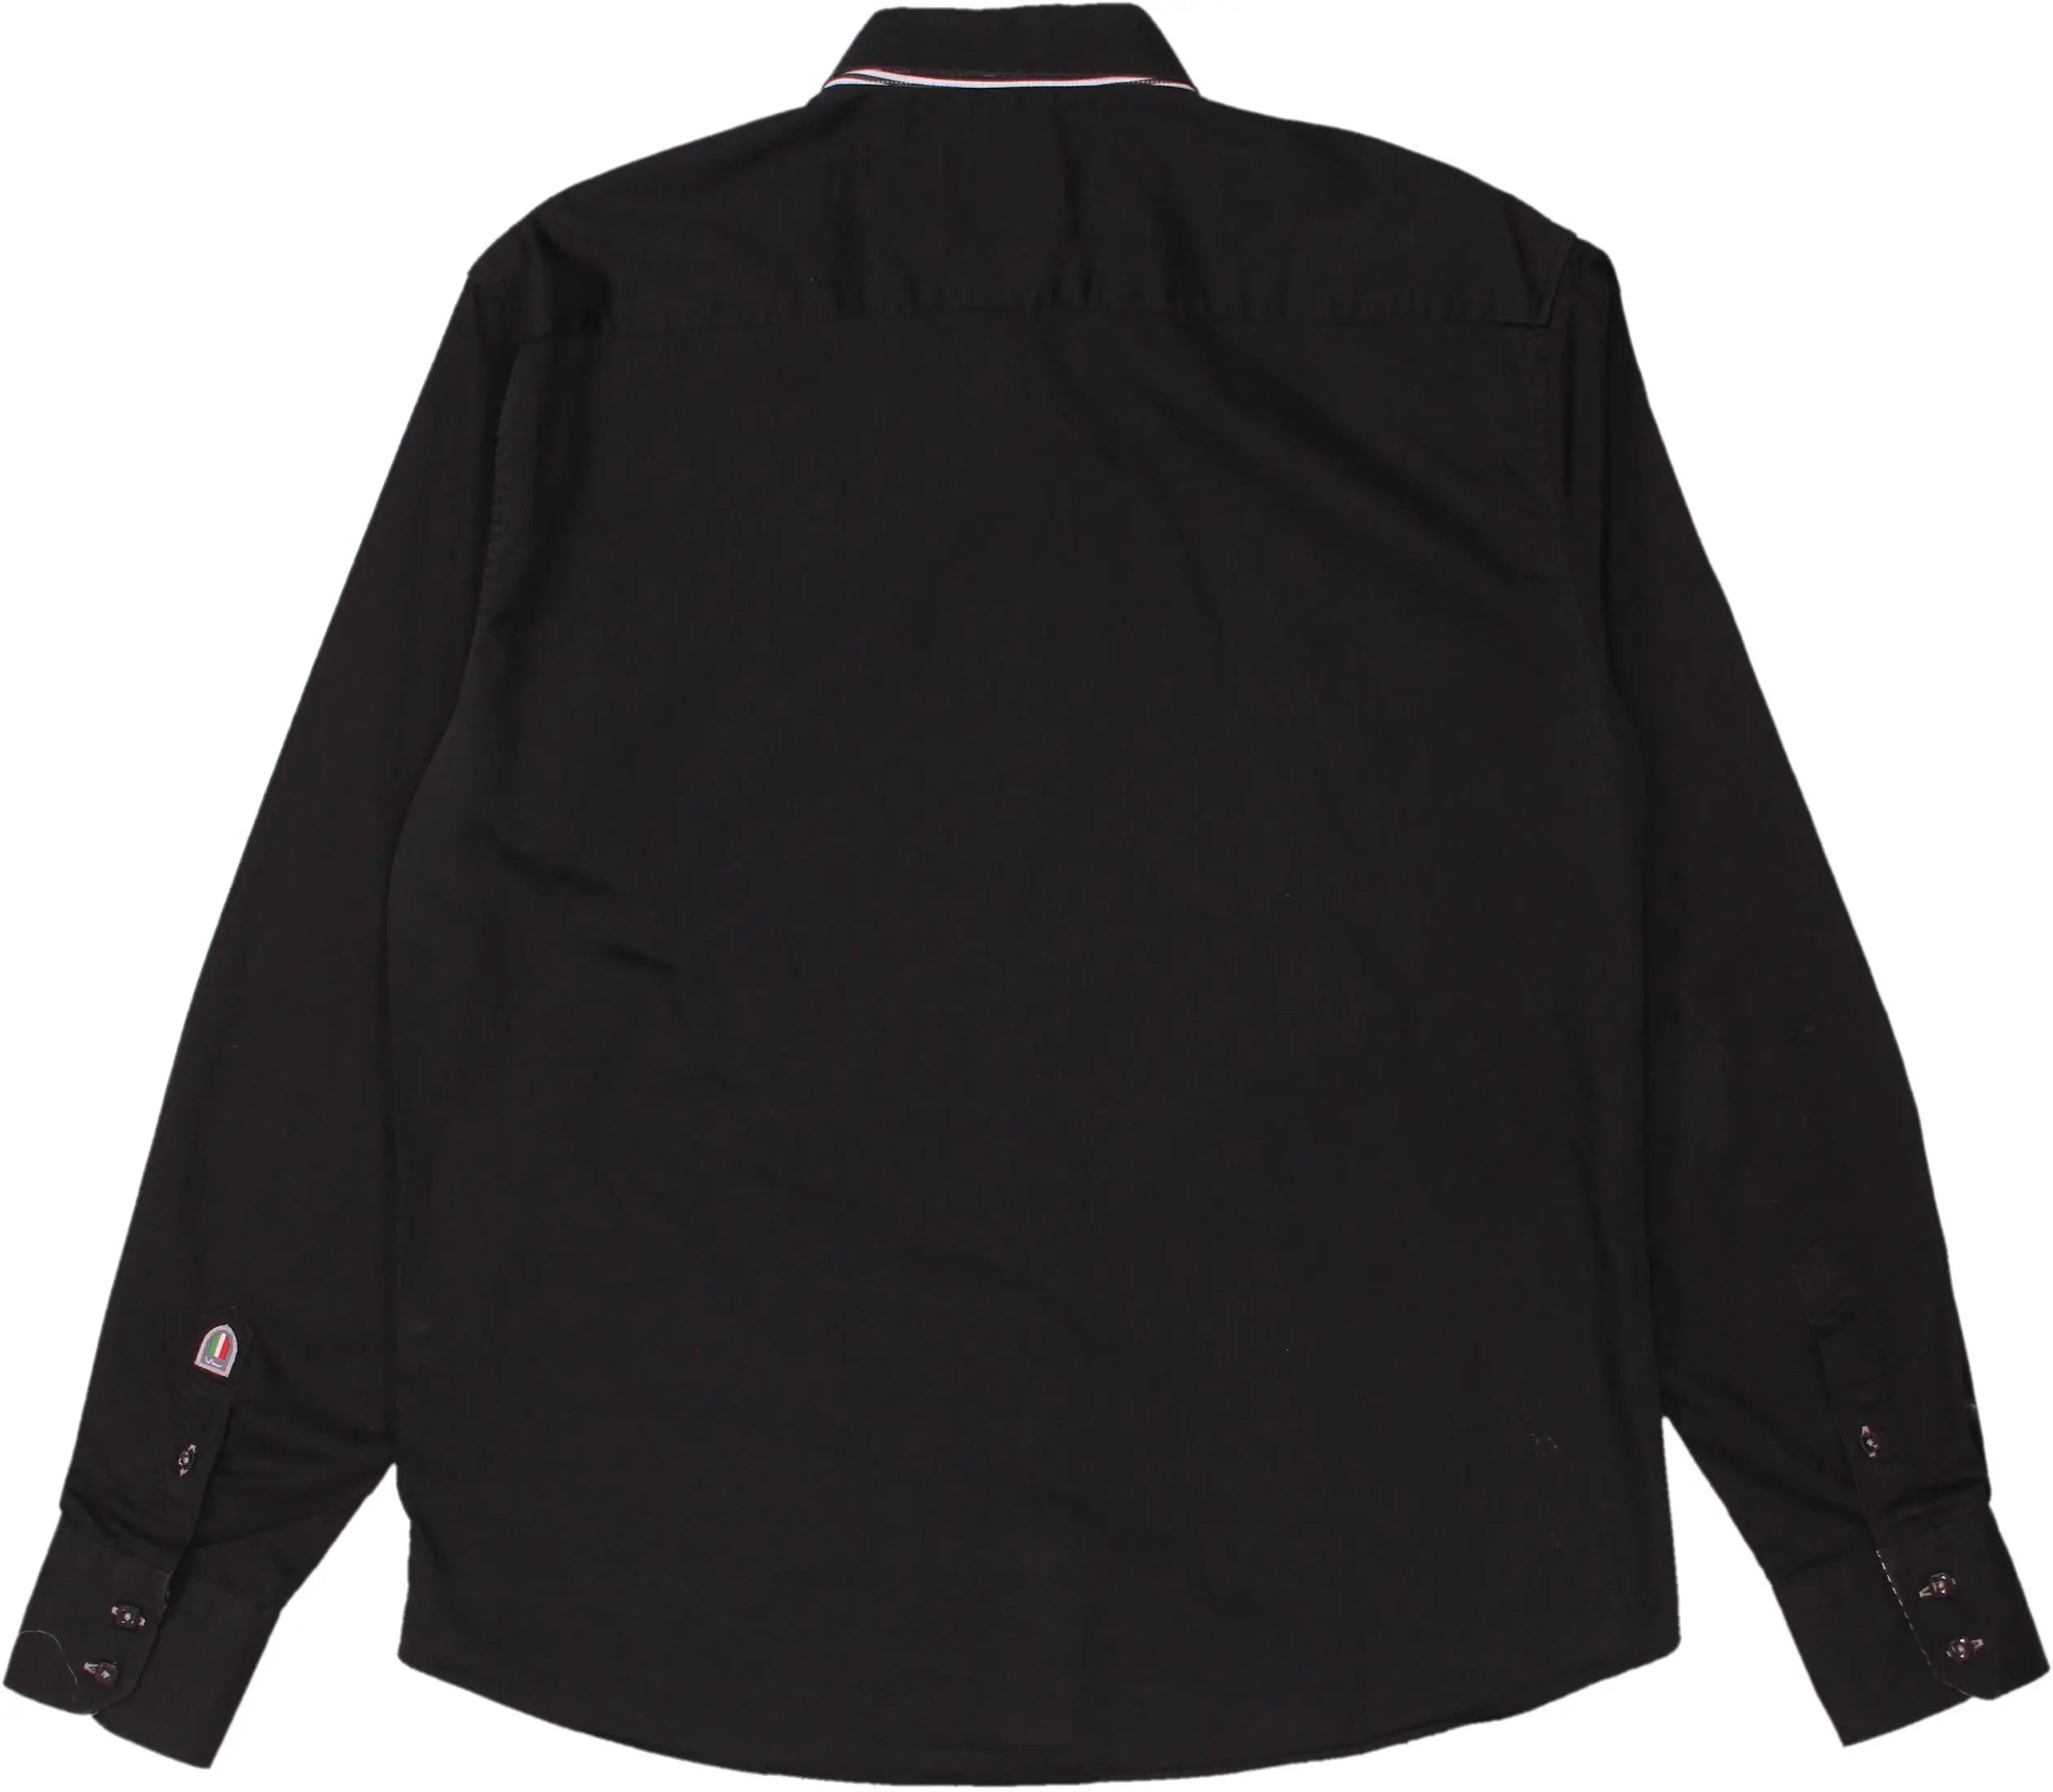 WAM Denim - Black Shirt- ThriftTale.com - Vintage and second handclothing